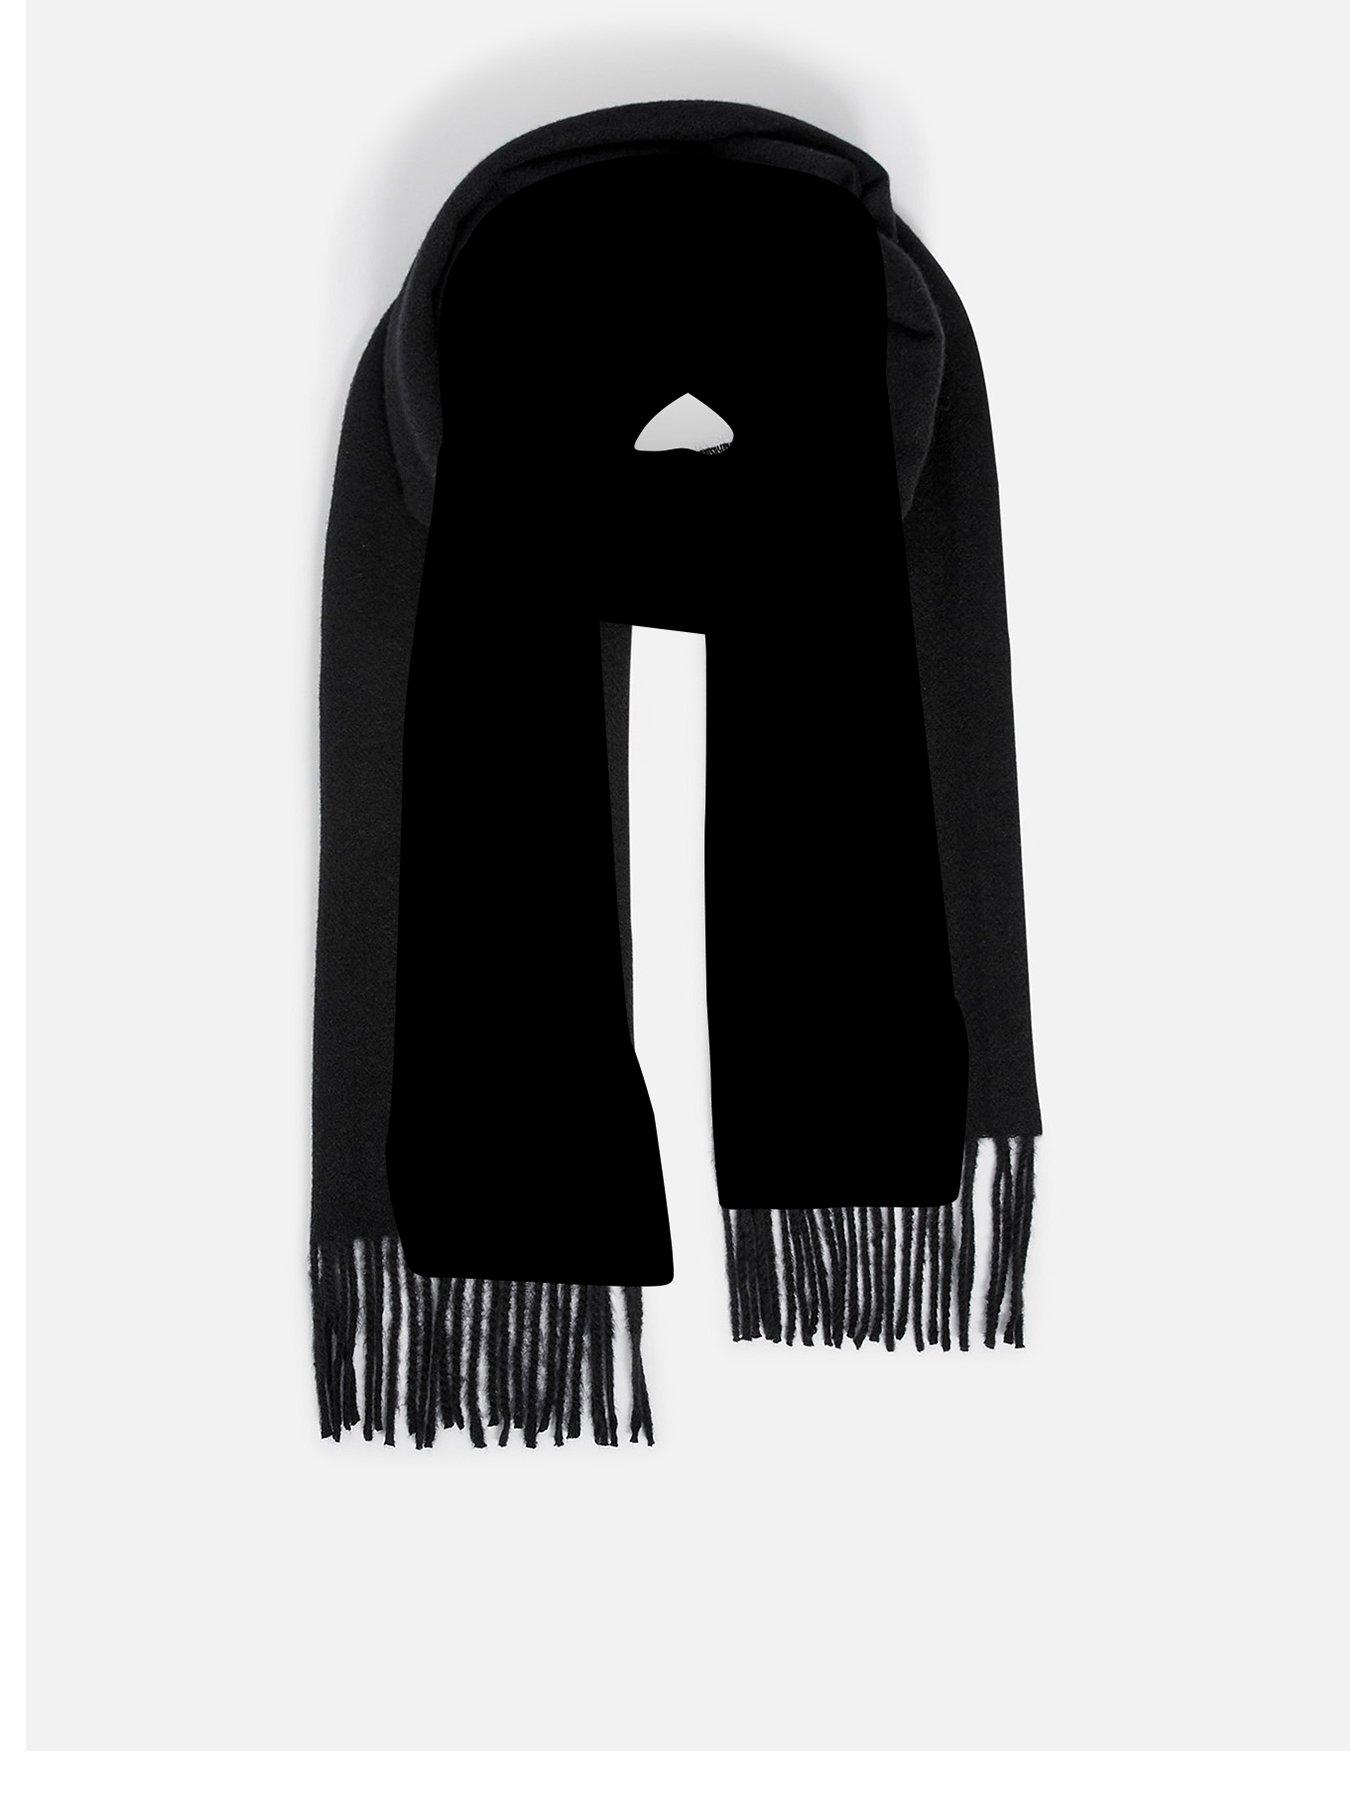 Yellow Single discount 63% WOMEN FASHION Accessories Scarf Zara scarf 